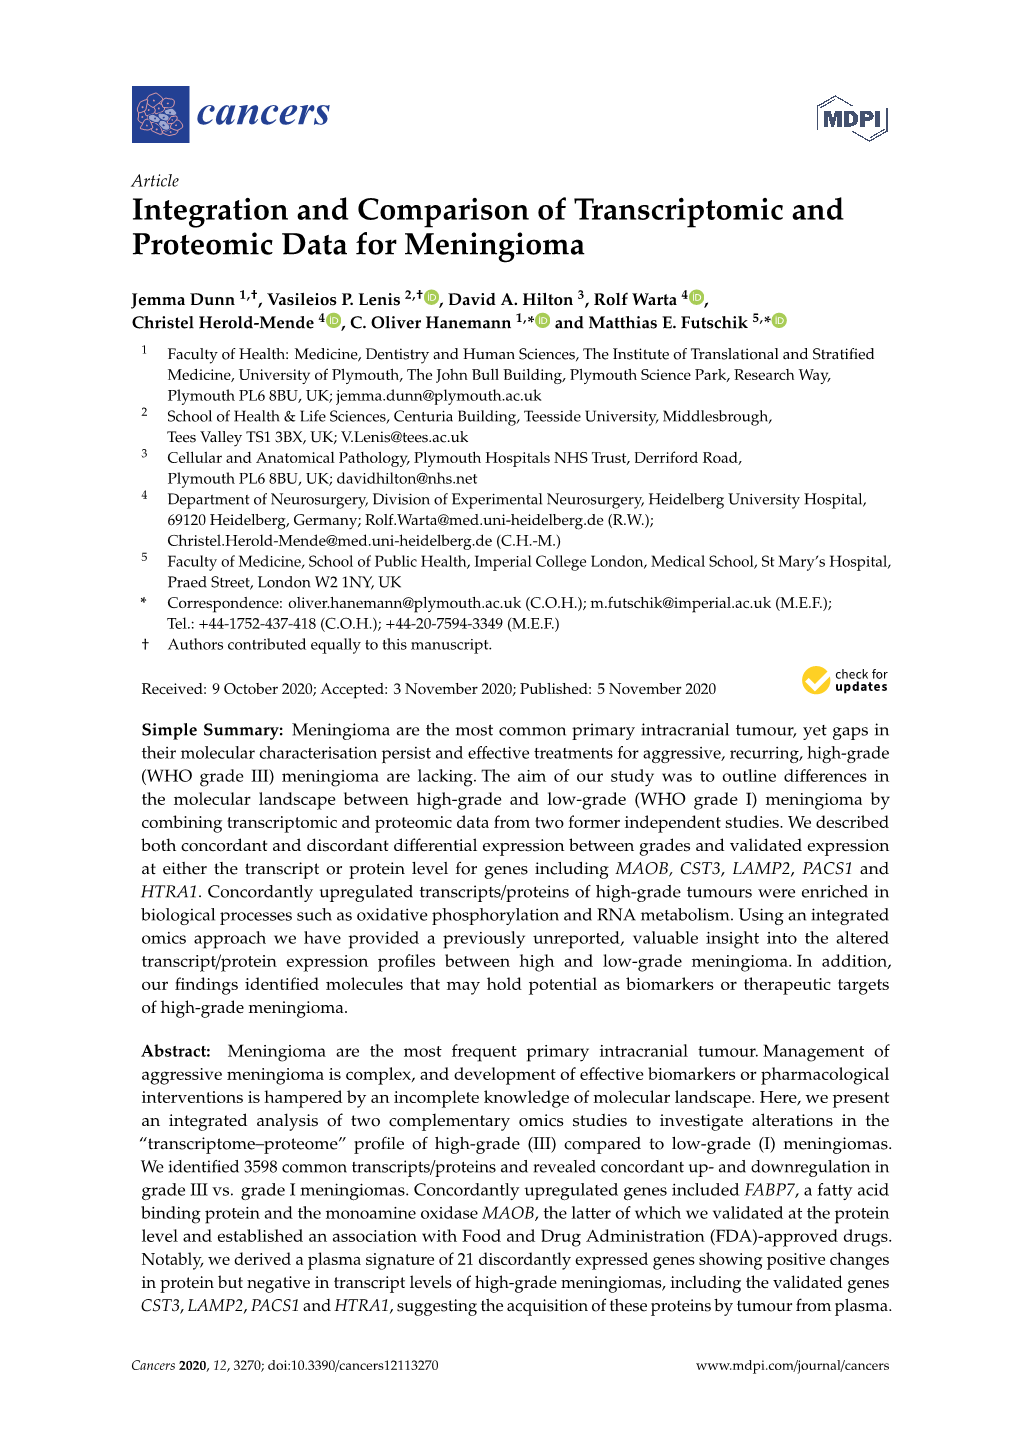 Integration and Comparison of Transcriptomic and Proteomic Data for Meningioma